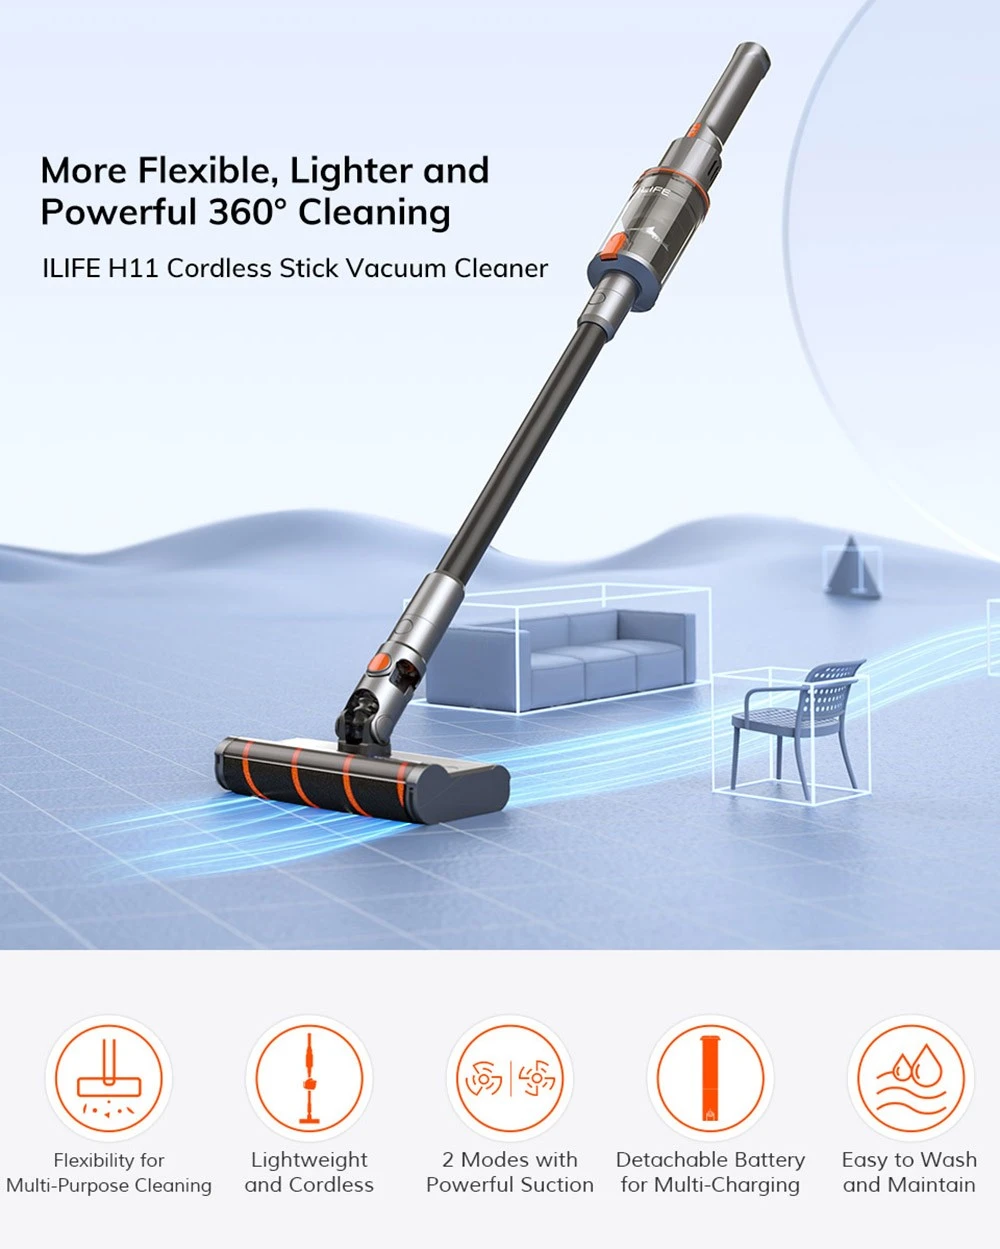 ILIFE H11 Cordless Handheld Vacuum Cleaner more flexxible, lighter